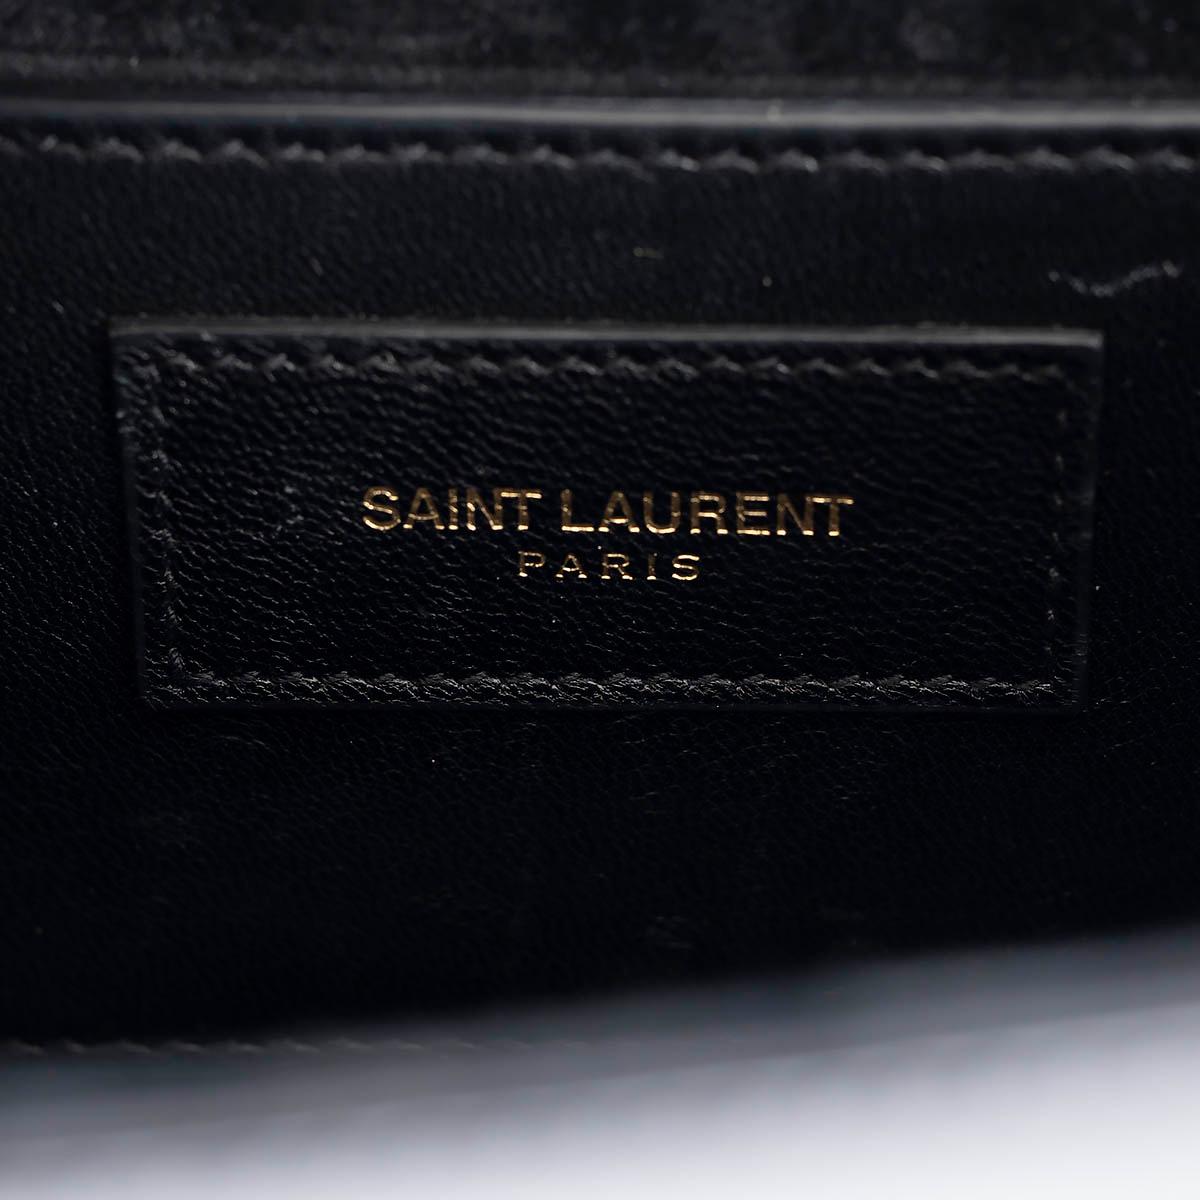 SAINT LAURENT black patent leather SMALL KATE TASSEL (original) Shoulder Bag 3